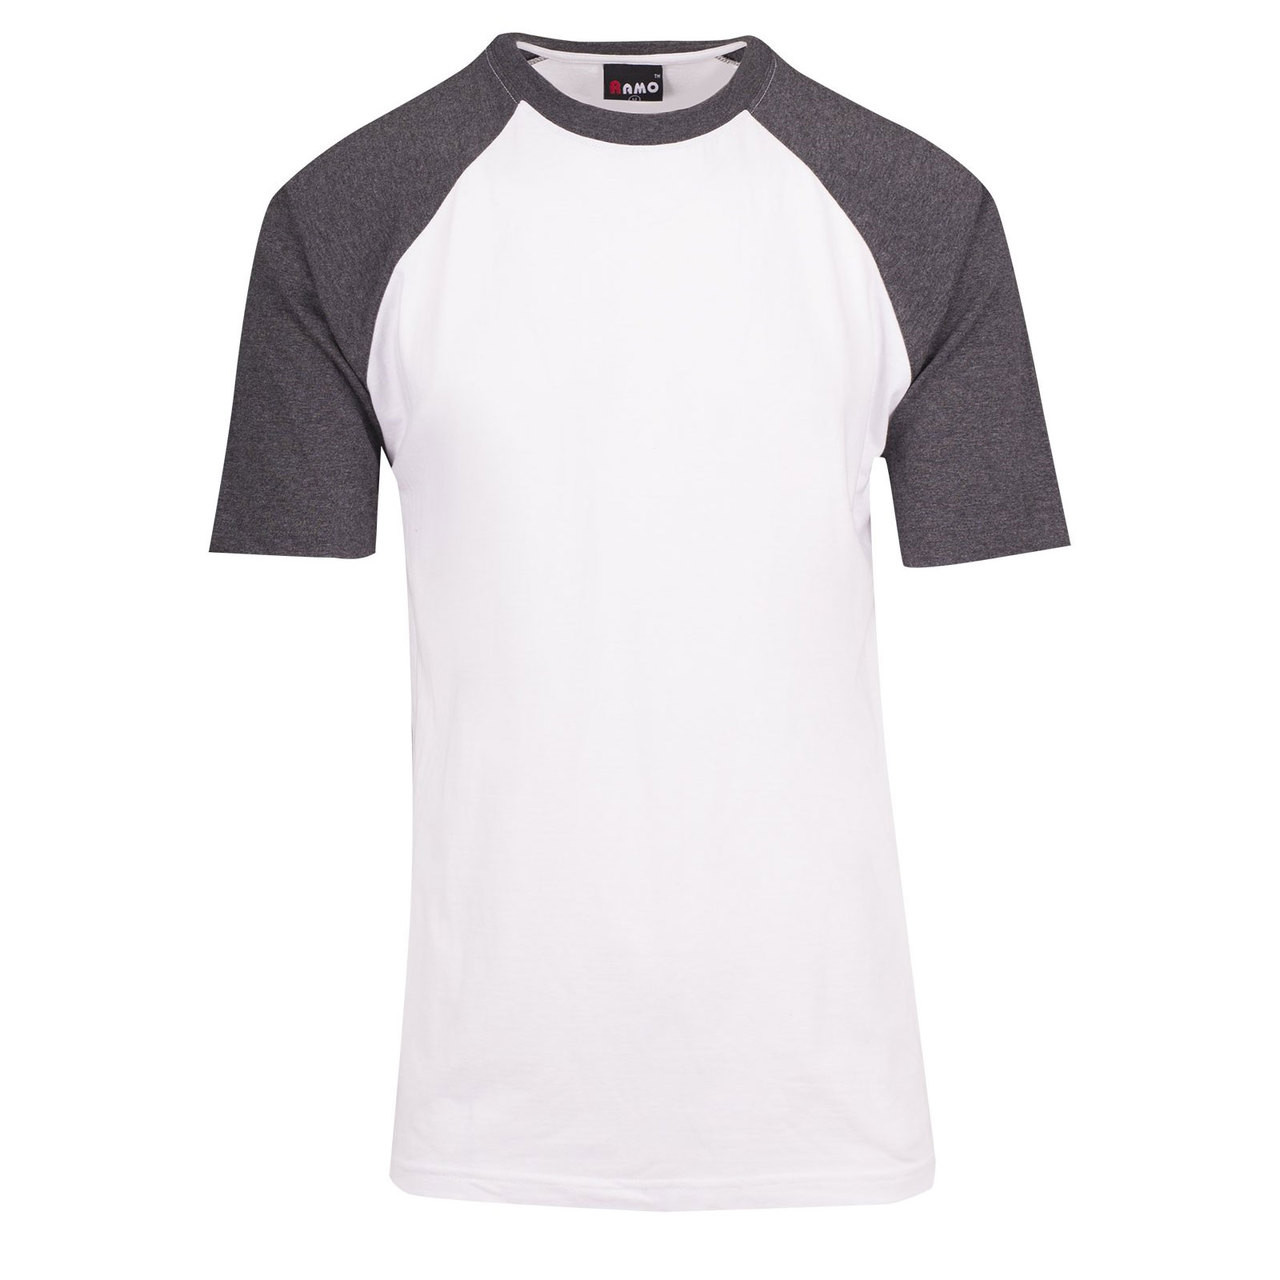 Two-Tone Cotton T-Shirts | Raglan Sleeves | Shop Mens Blank Clothing ...